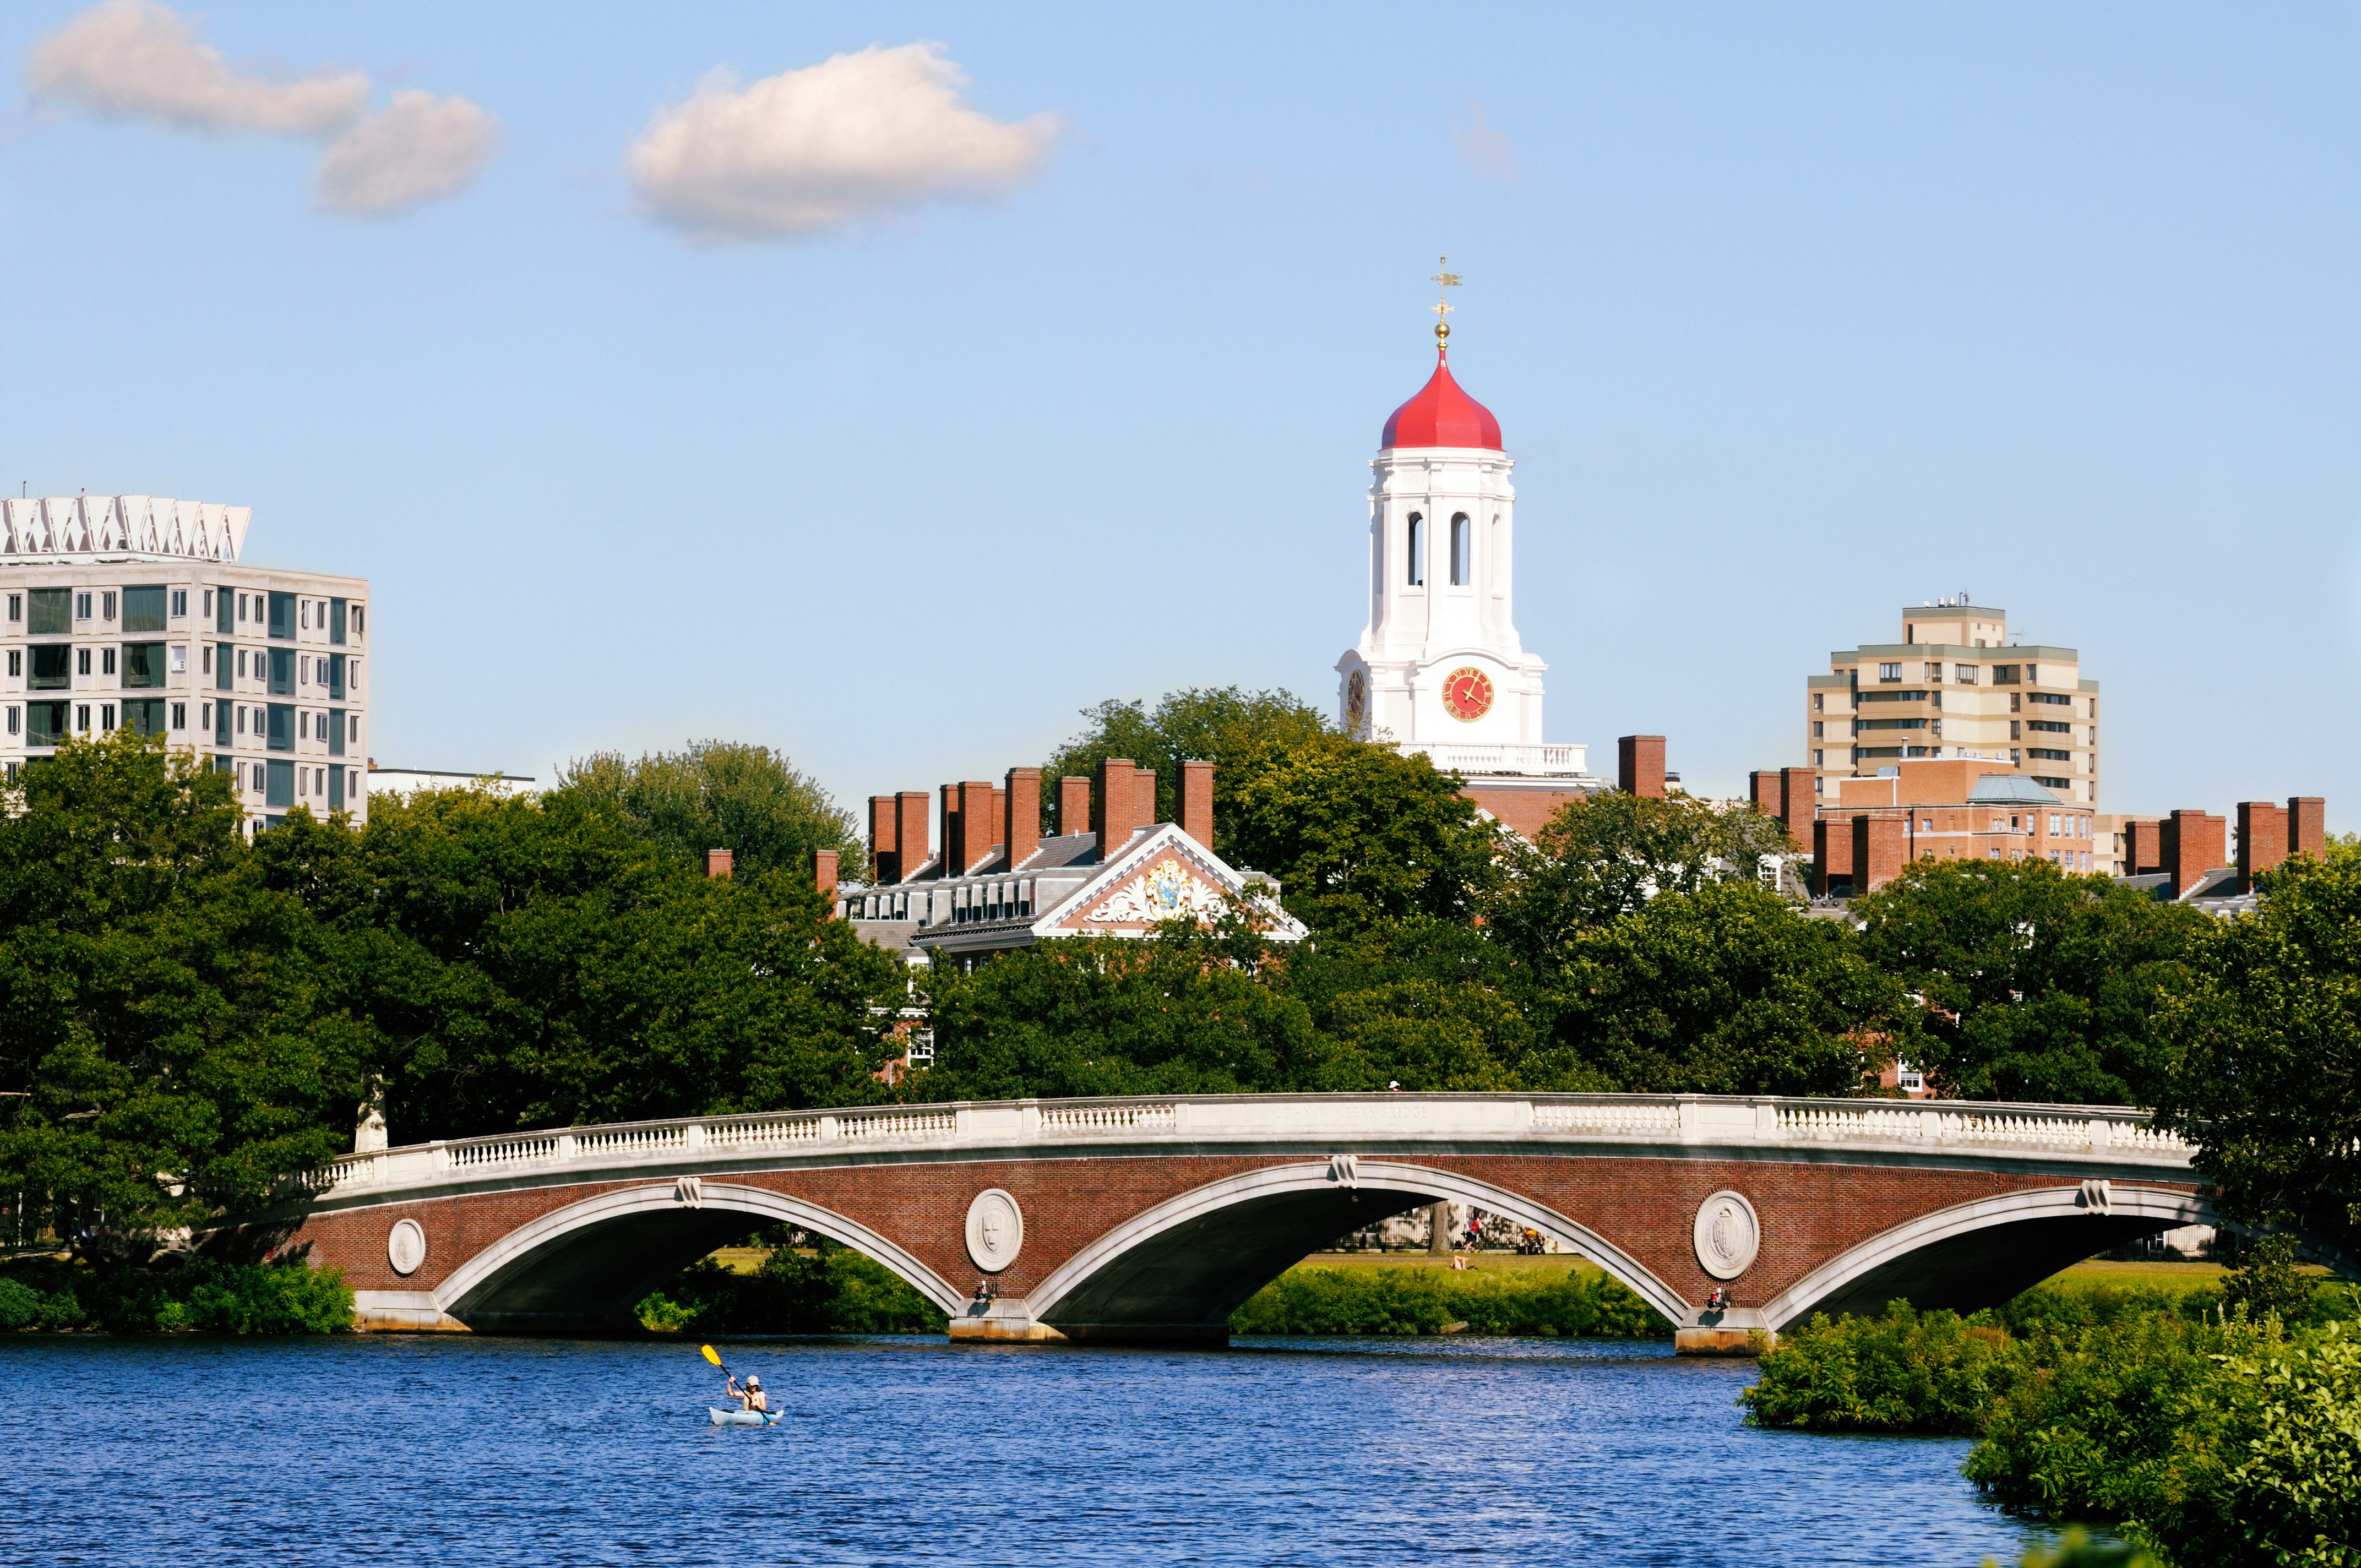 Harvard University and pedestrian bridge on Charles River in Cambridge, Massachusetts.